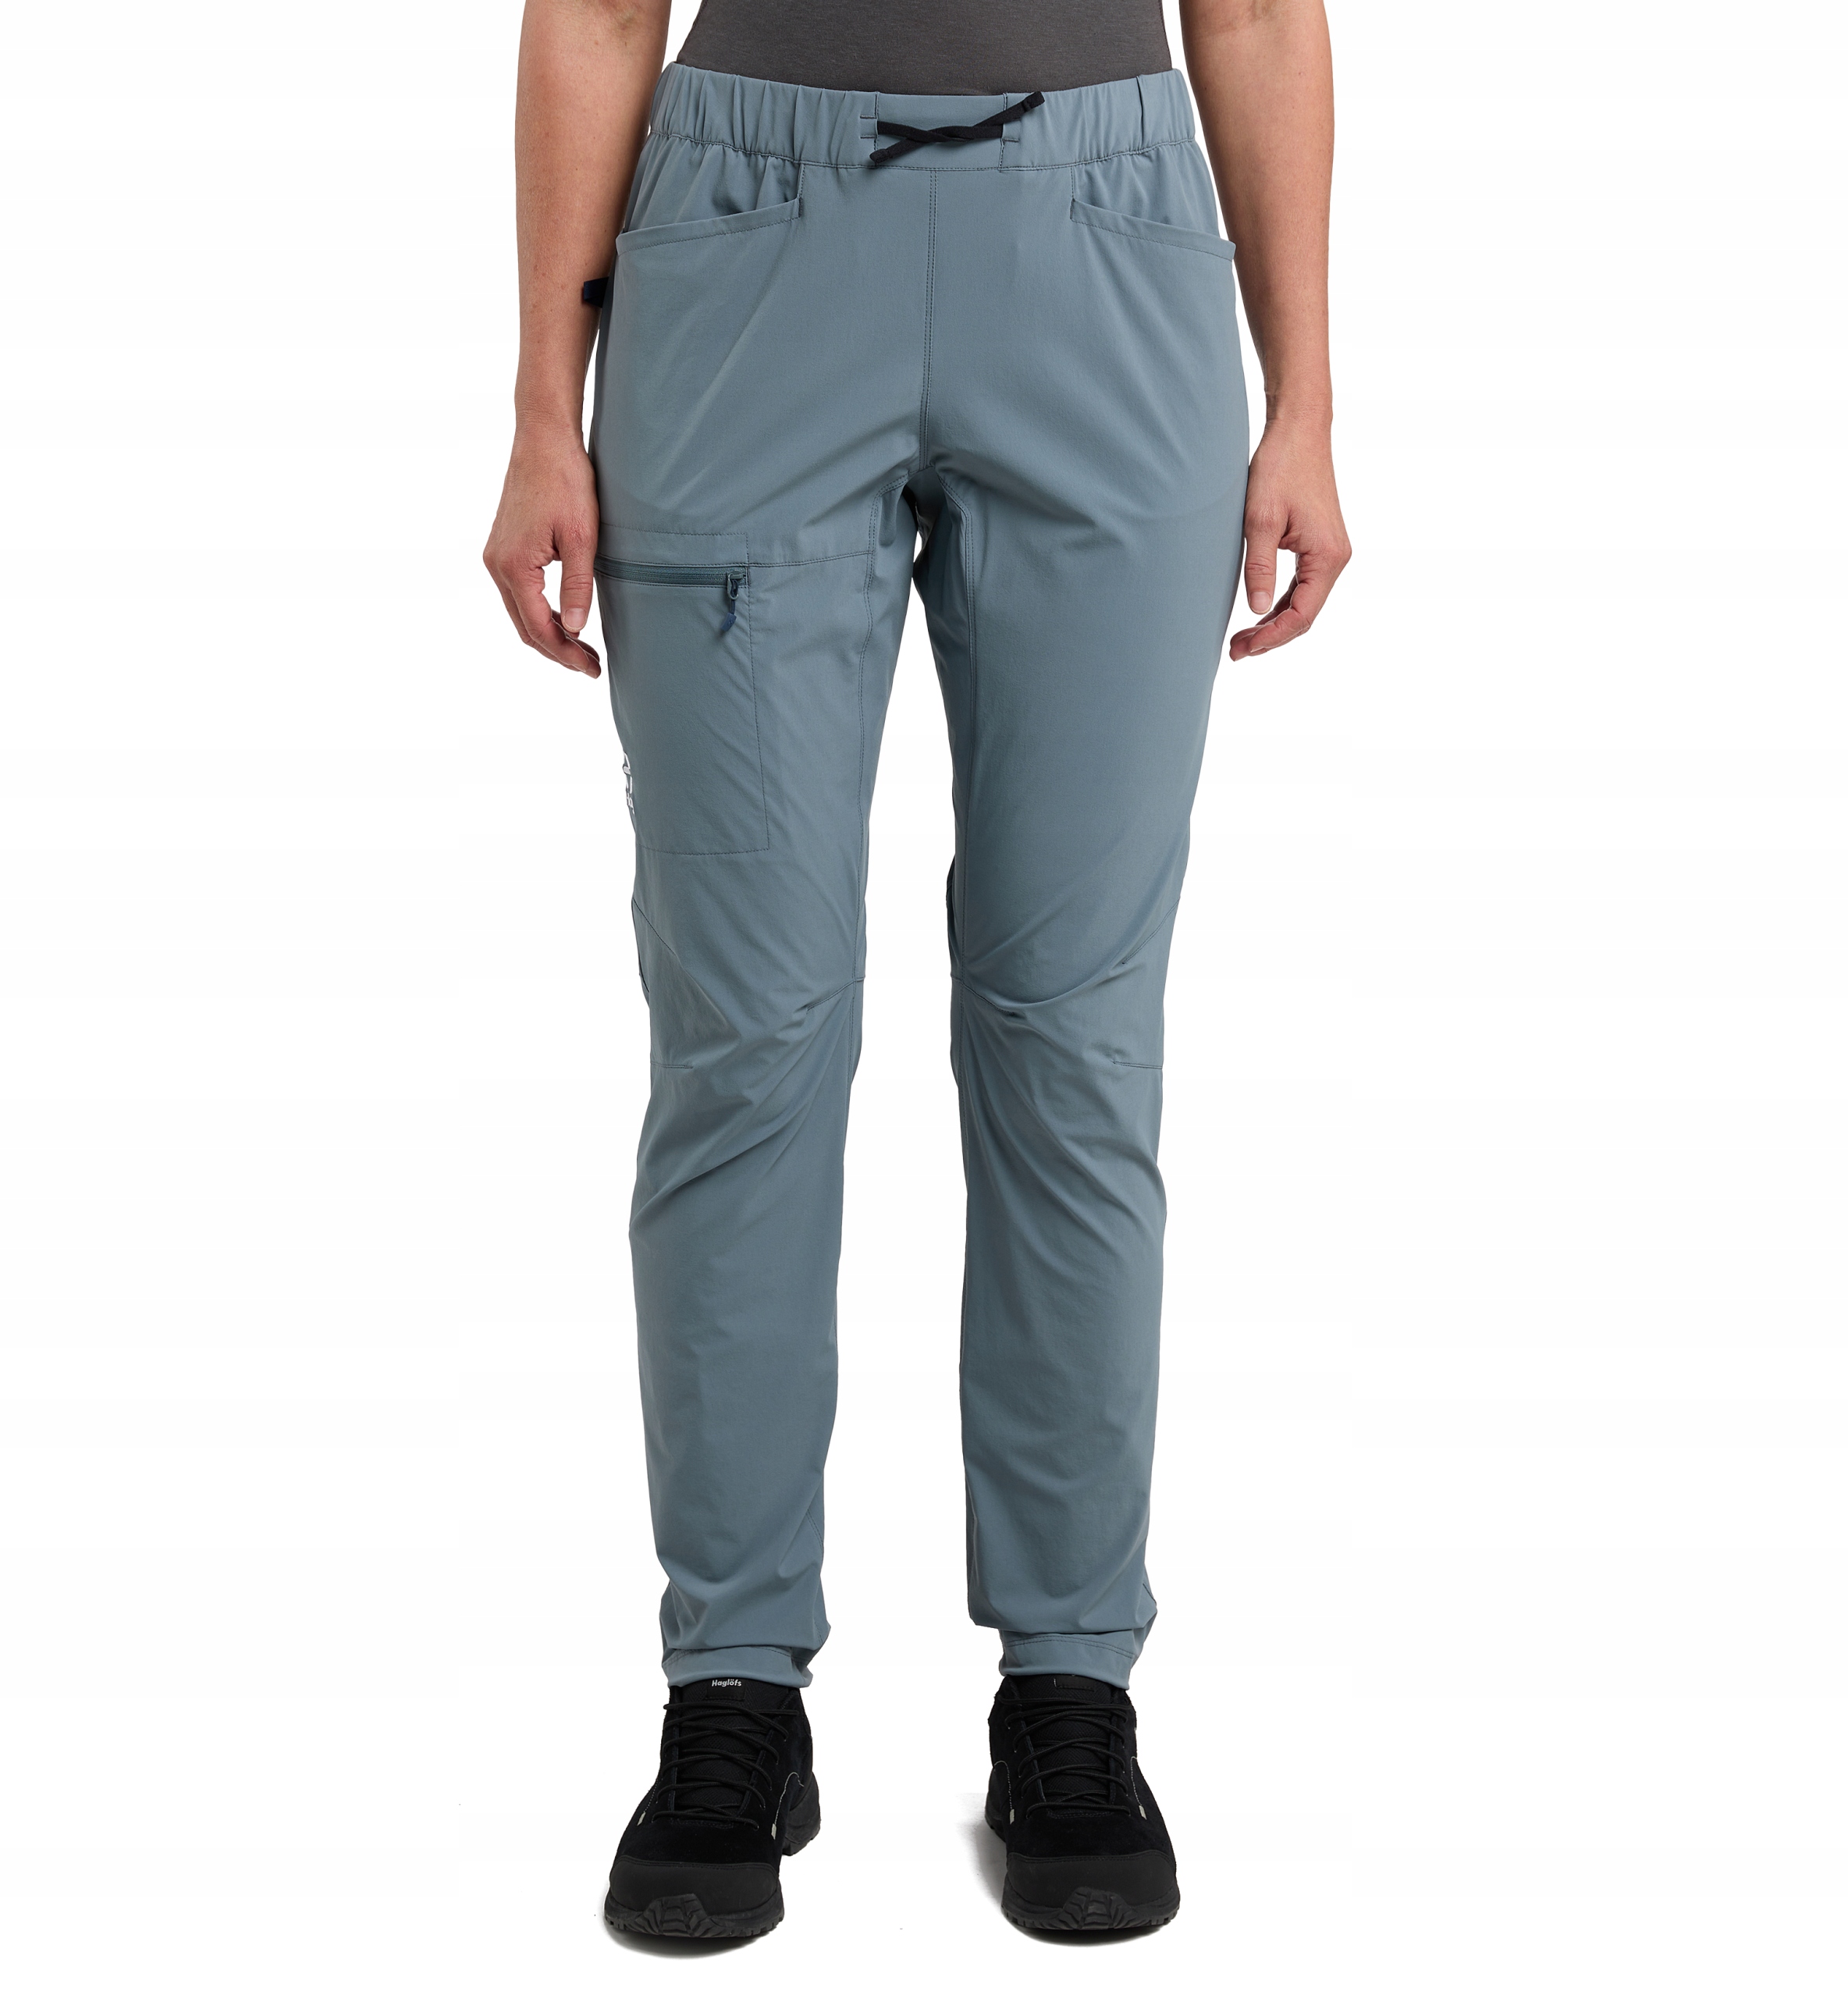 Horolezecké nohavice Haglofs ROC Lite Standard - dámske - Steel Blue